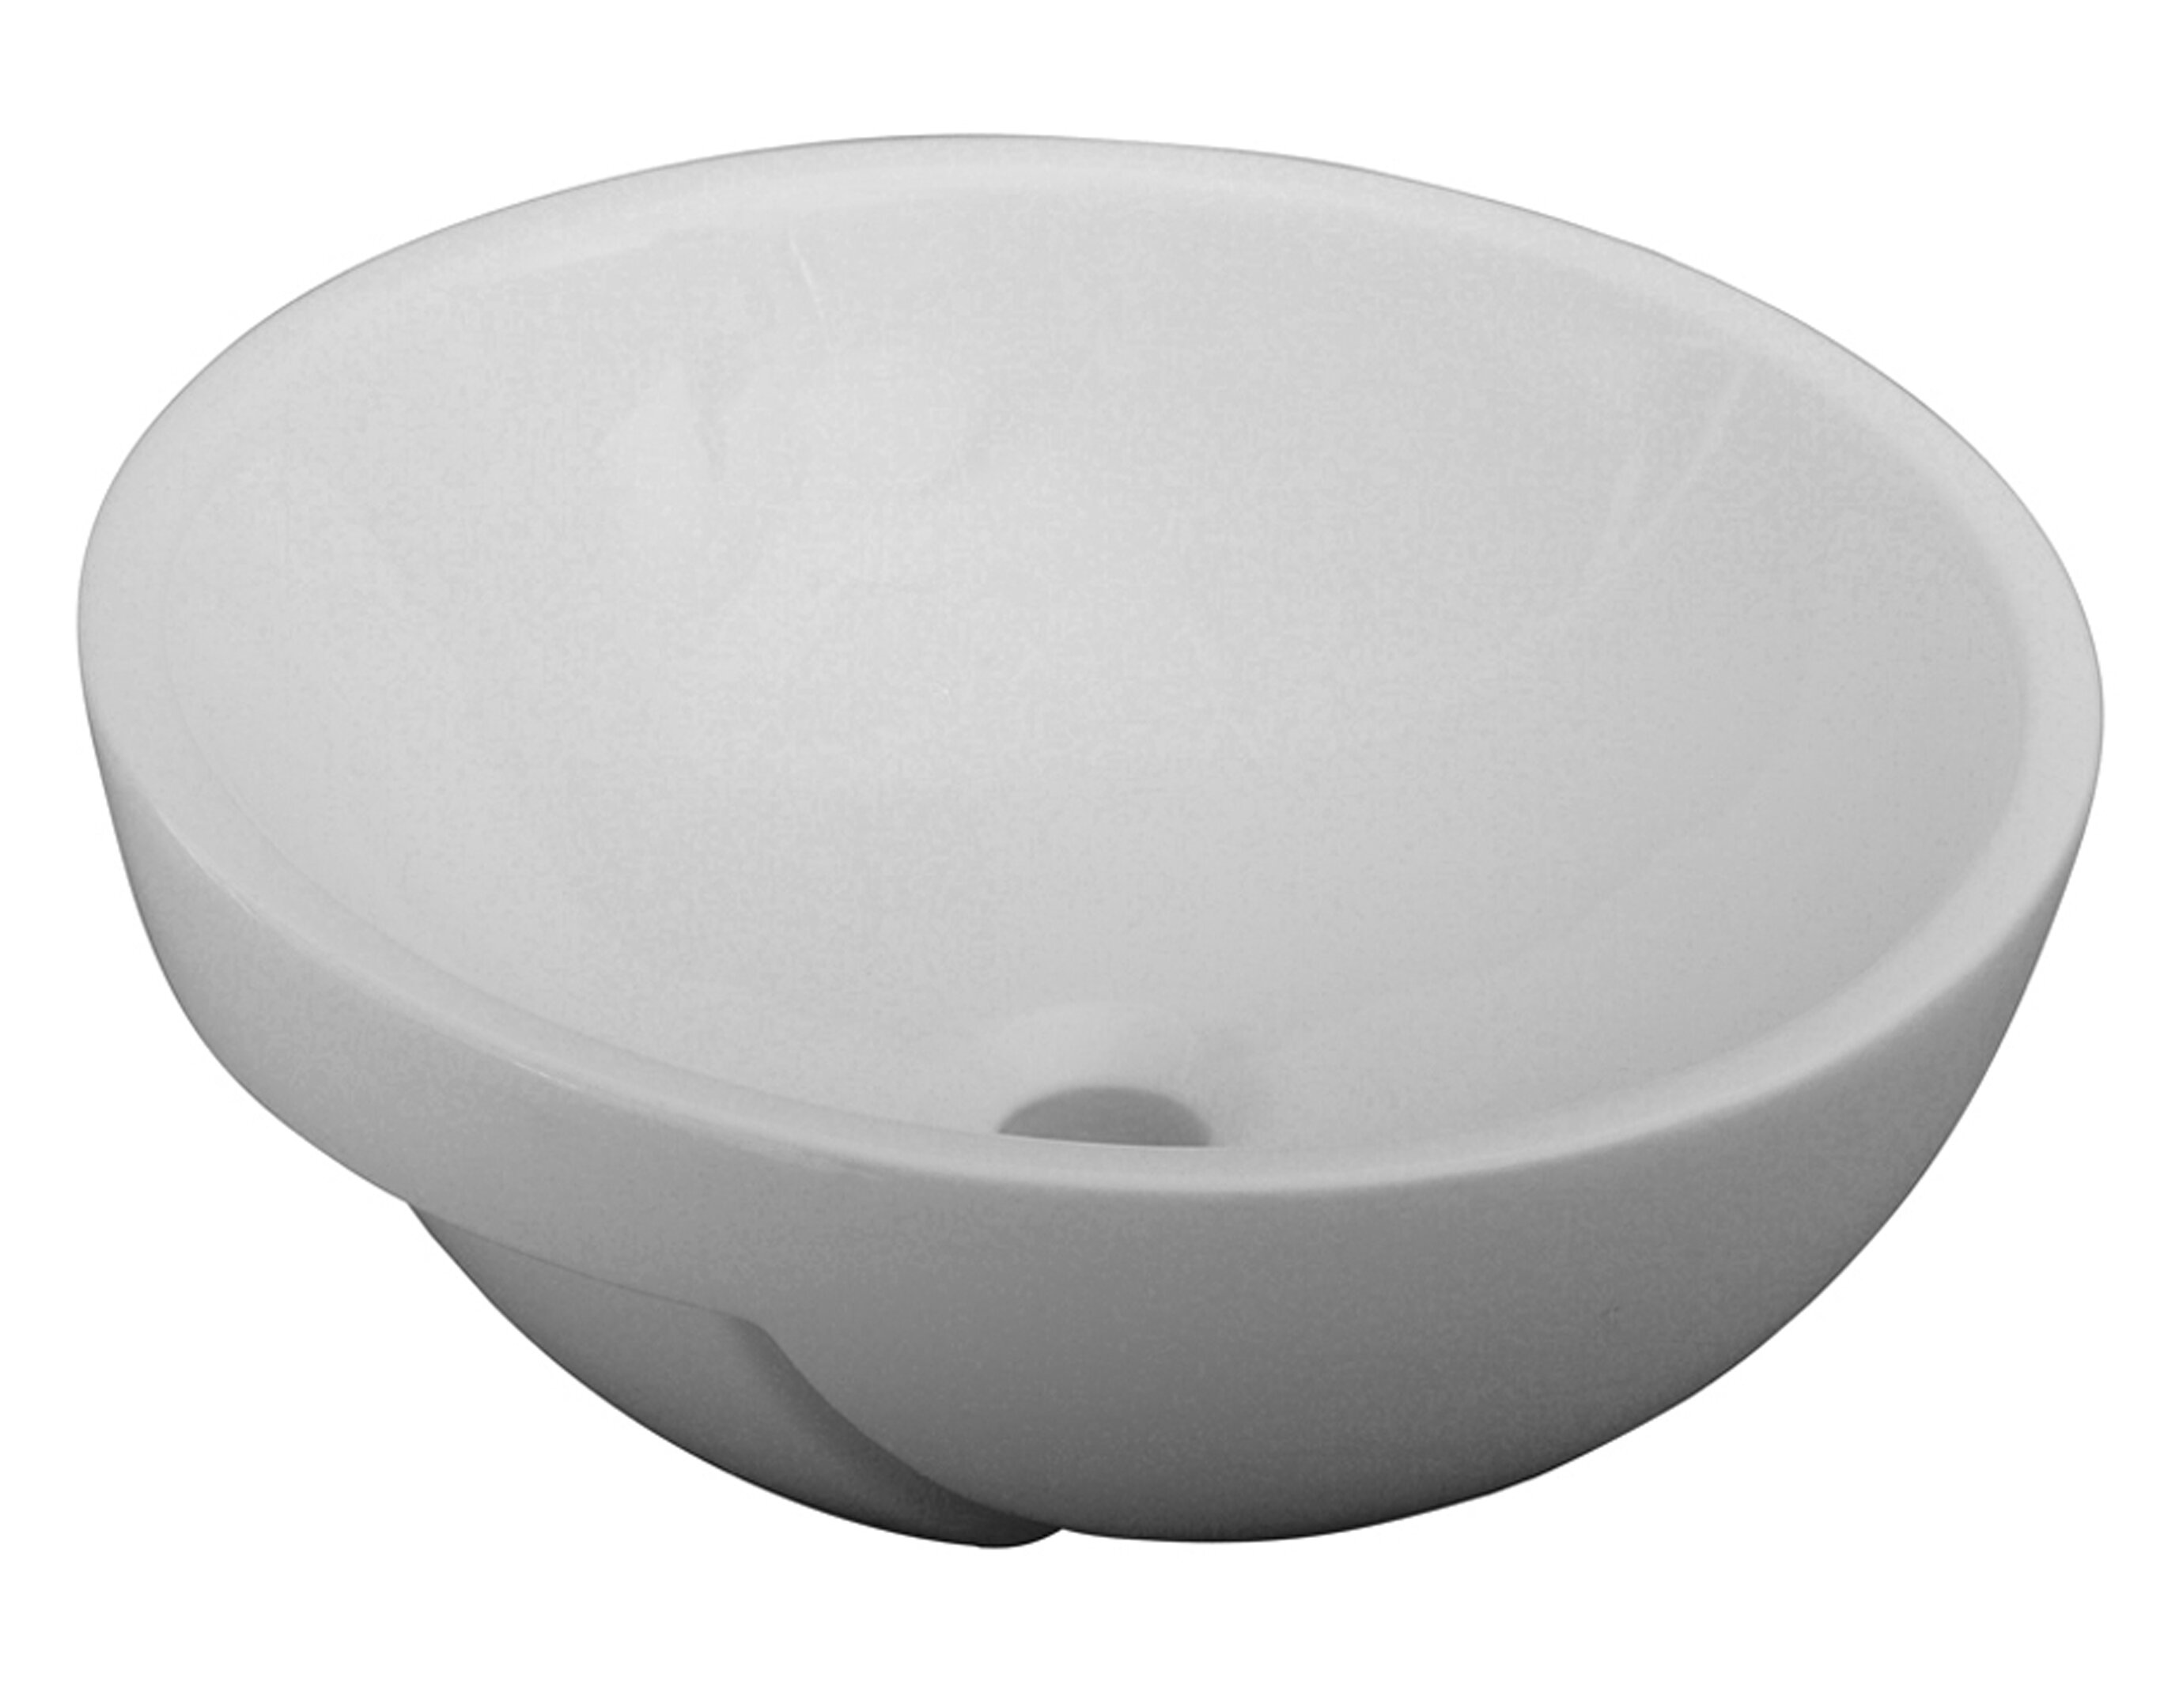 haze2270 34896992 ceramic square vessel bathroom sink